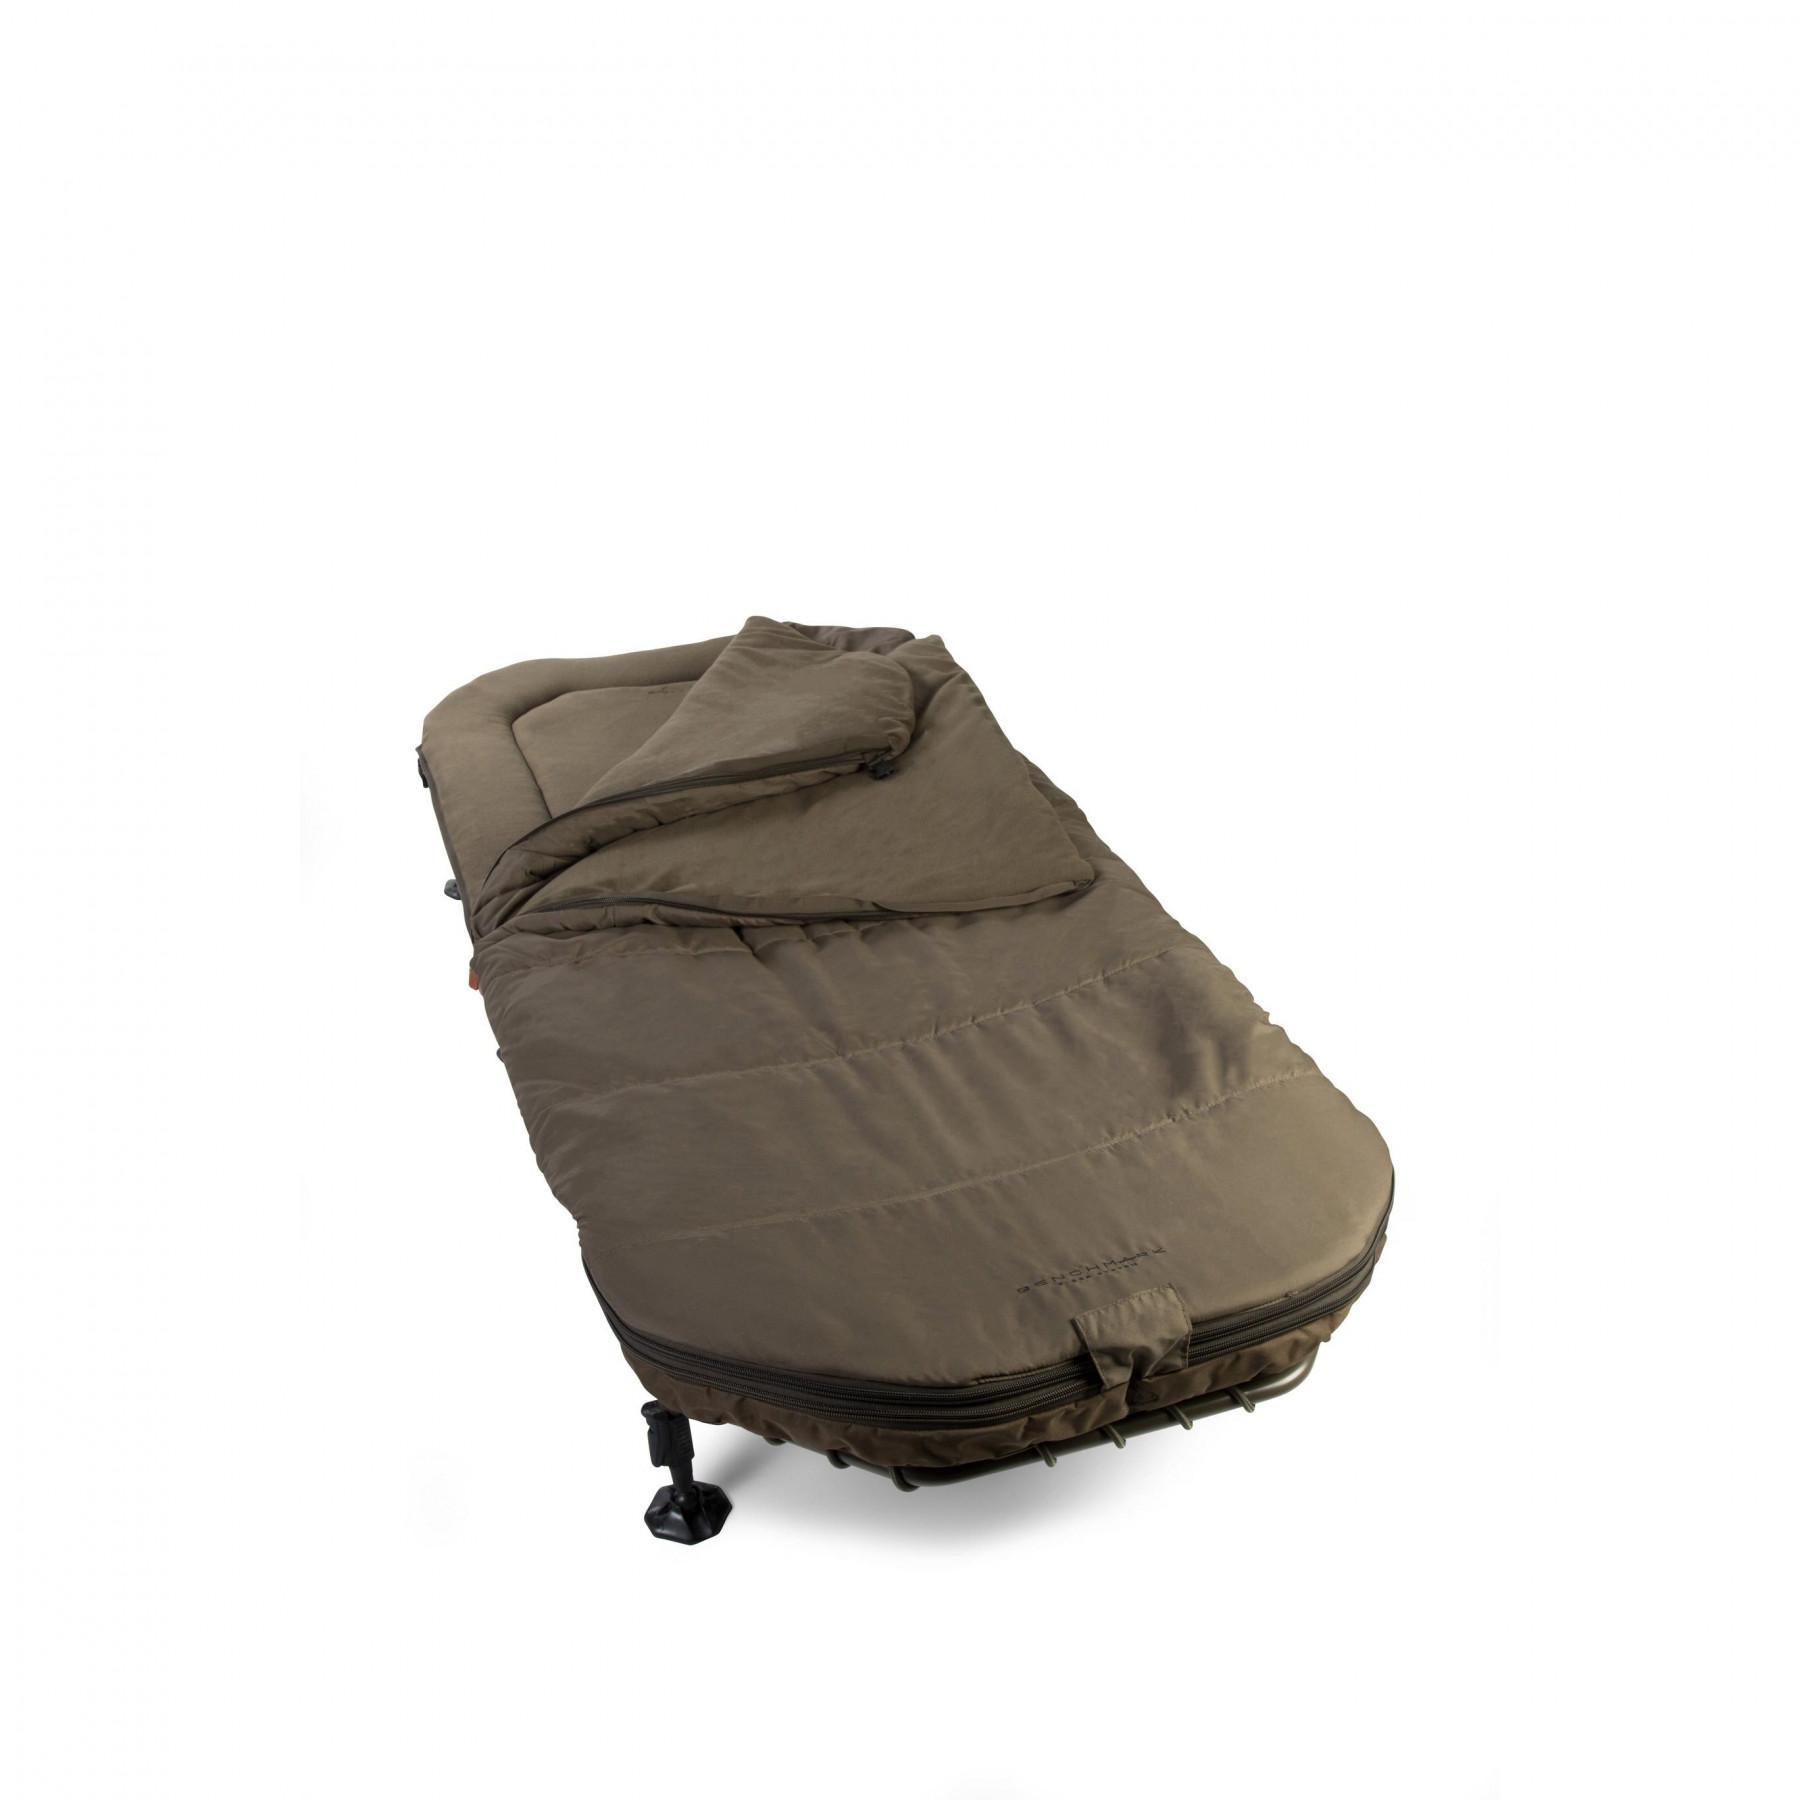 Bed Chair Avid Carp Benchmark Memory Foam System 14kg